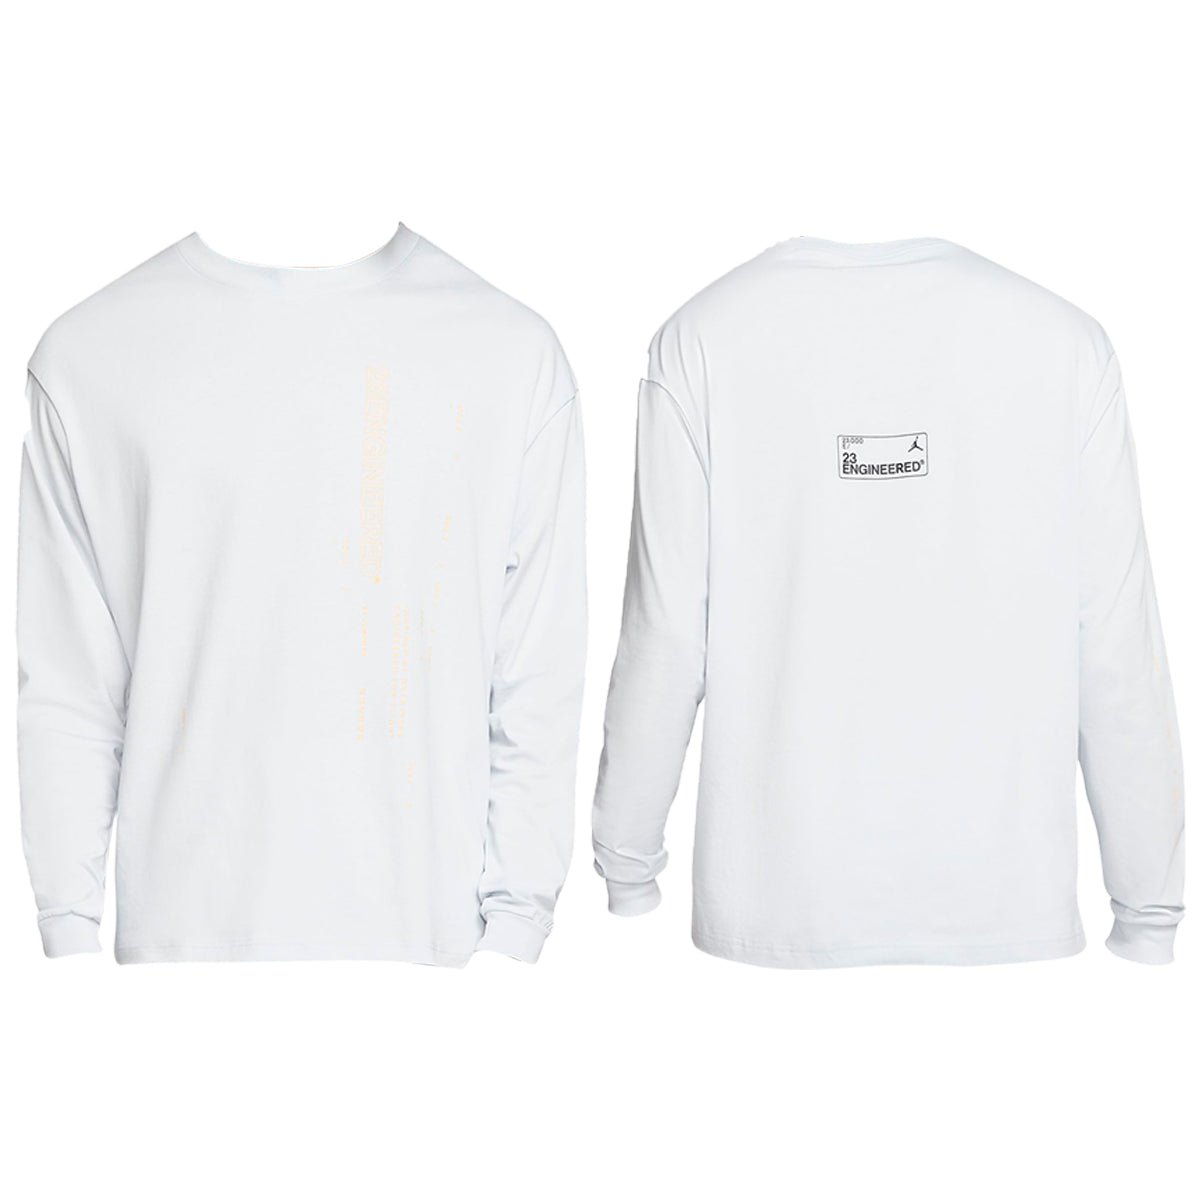 Jordan 23 Engineered Long-sleeve T-shirt Mens Style : Cd5505